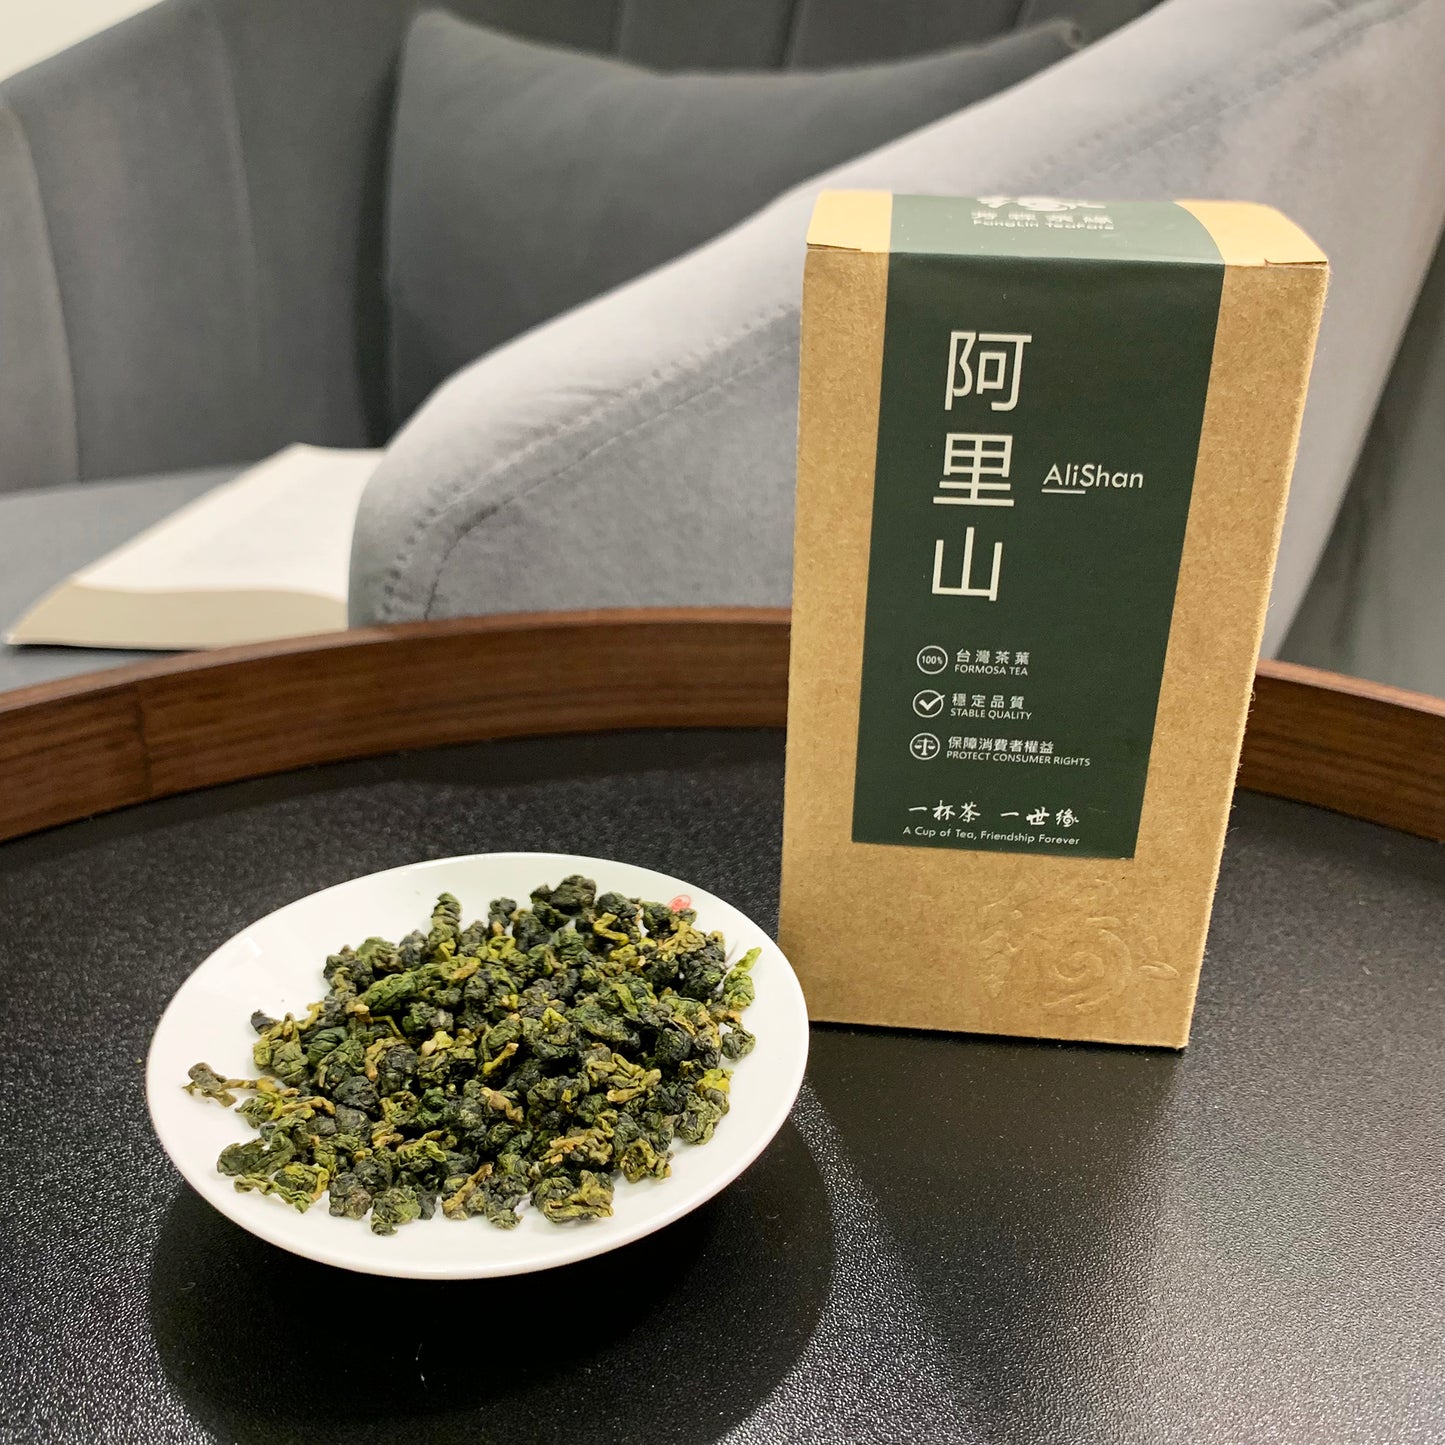 阿里山-巃頭 烏龍茶 / Alishan Loongtou Oolong Tea 高山茗茶